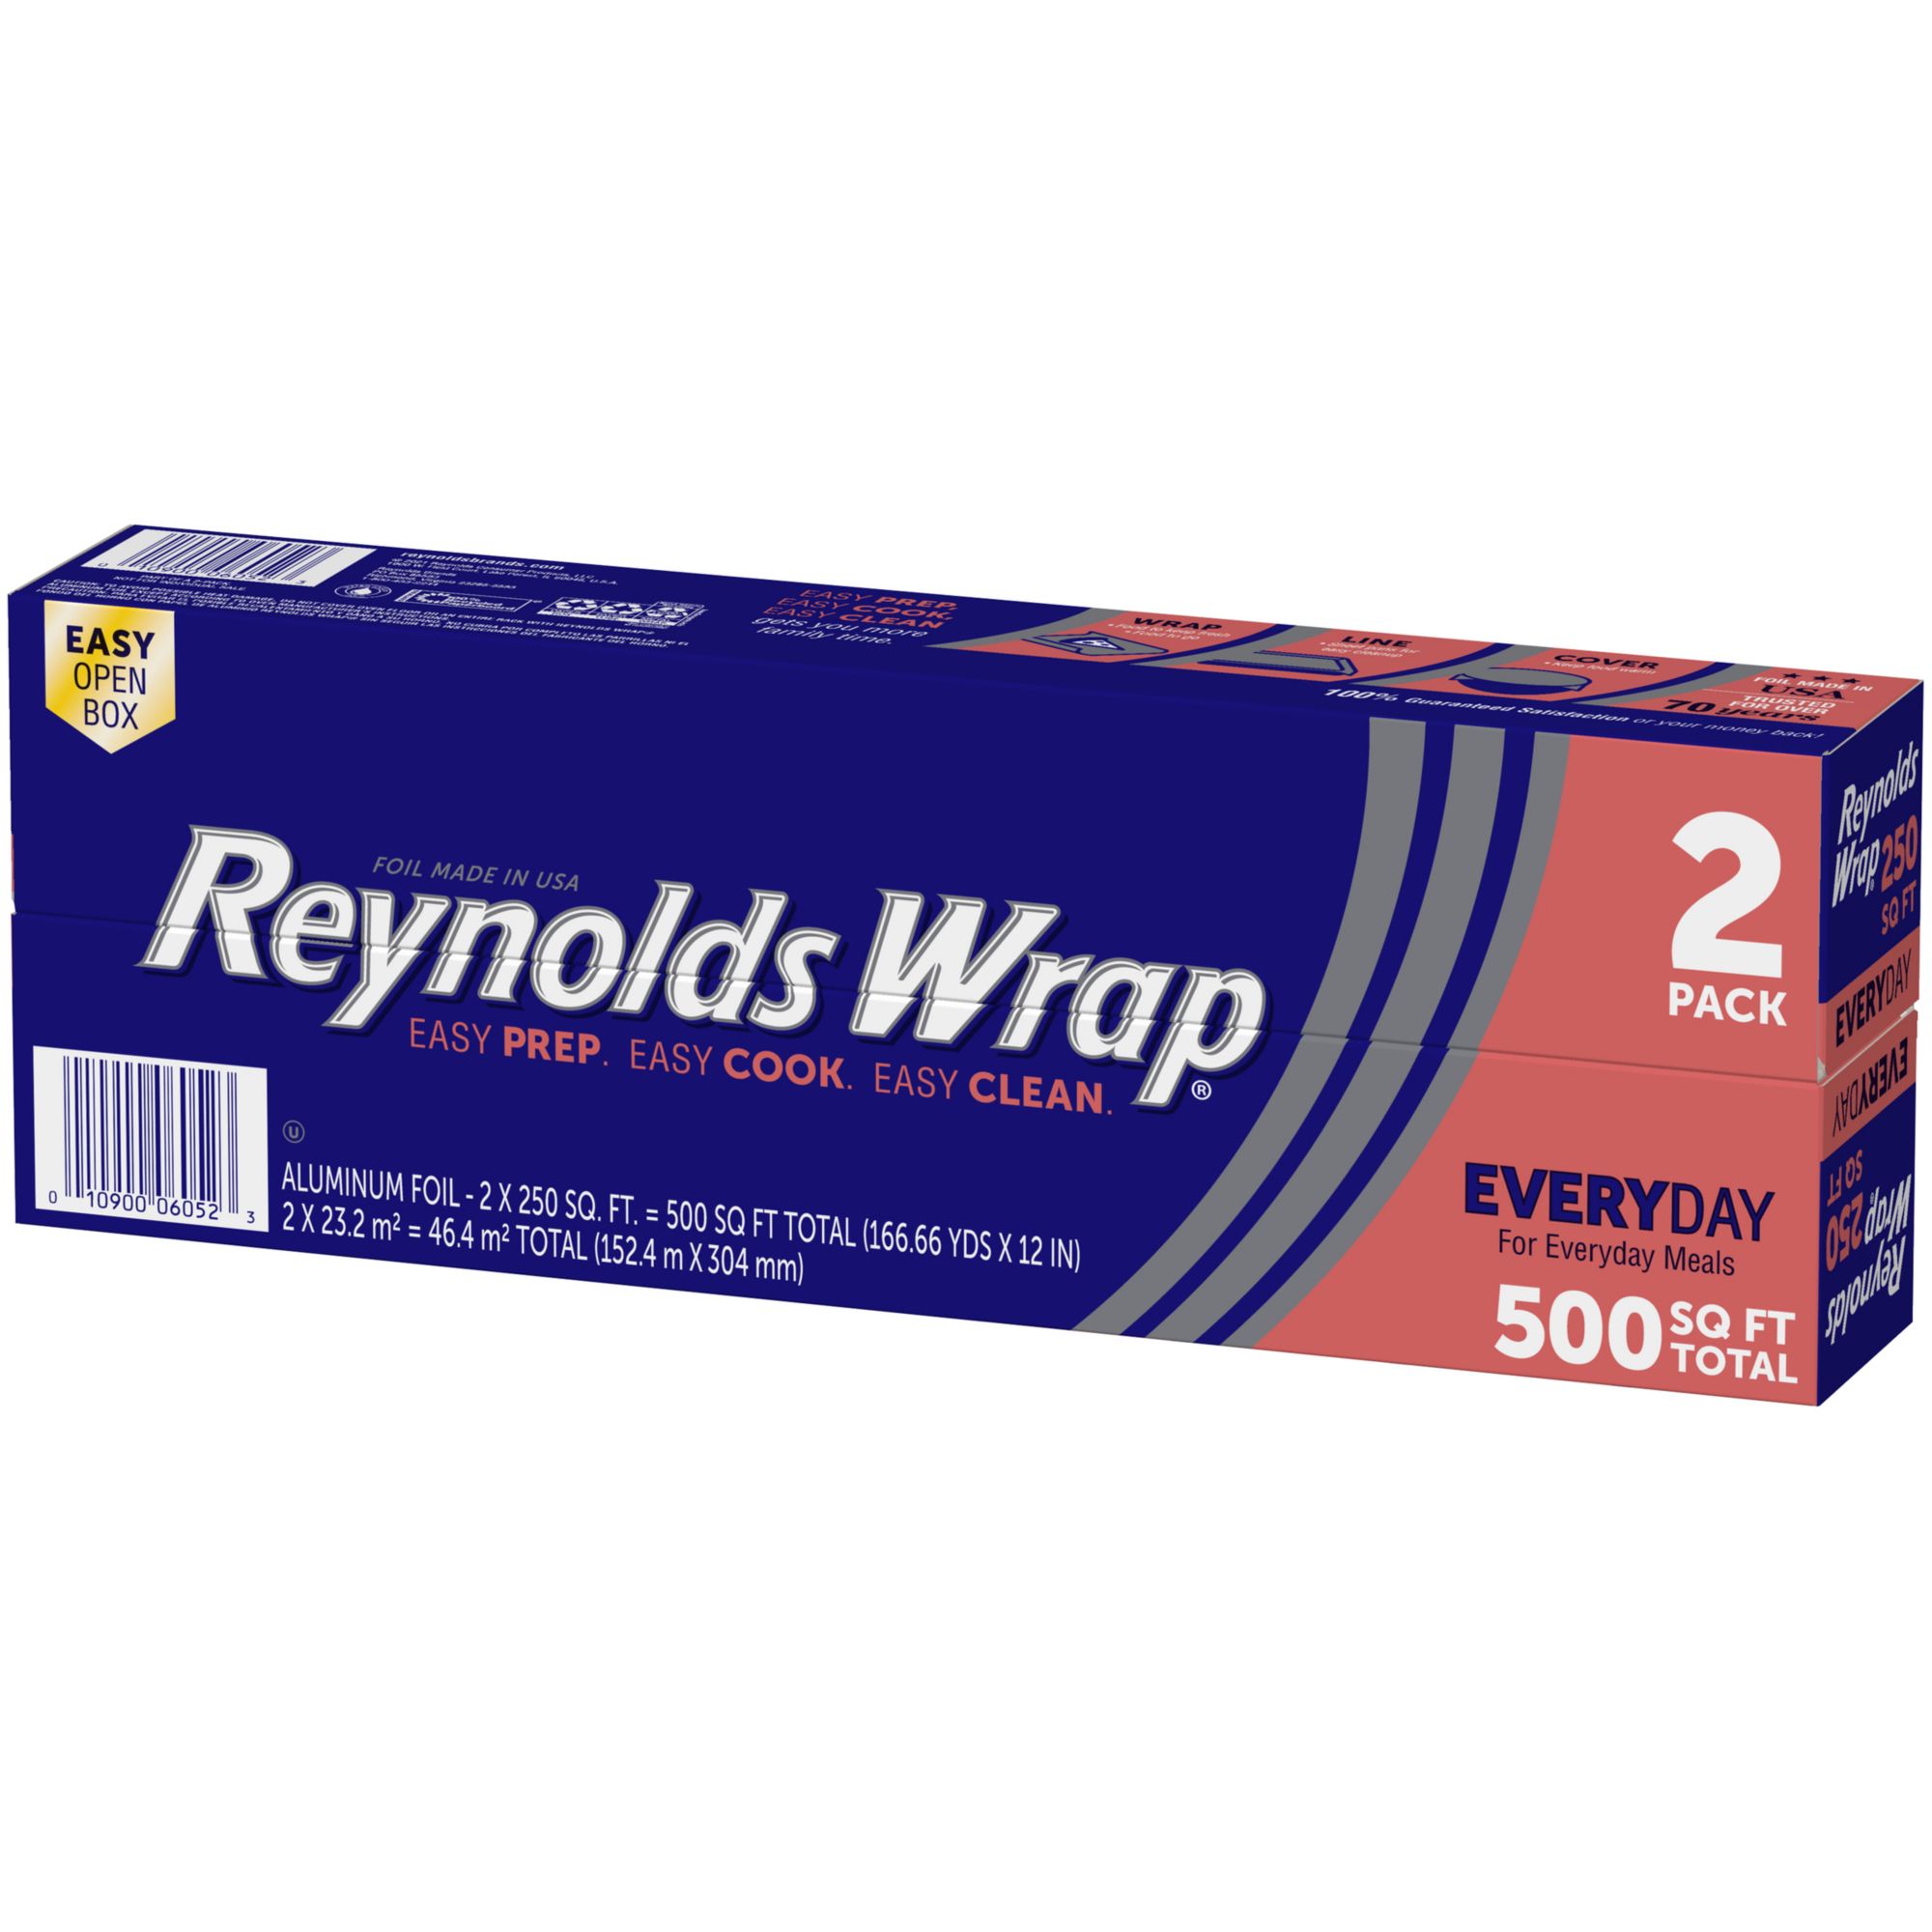 Reynolds Wrap Pre-Cut Aluminum Foil Sheets, 14x10.25 Inches, 50